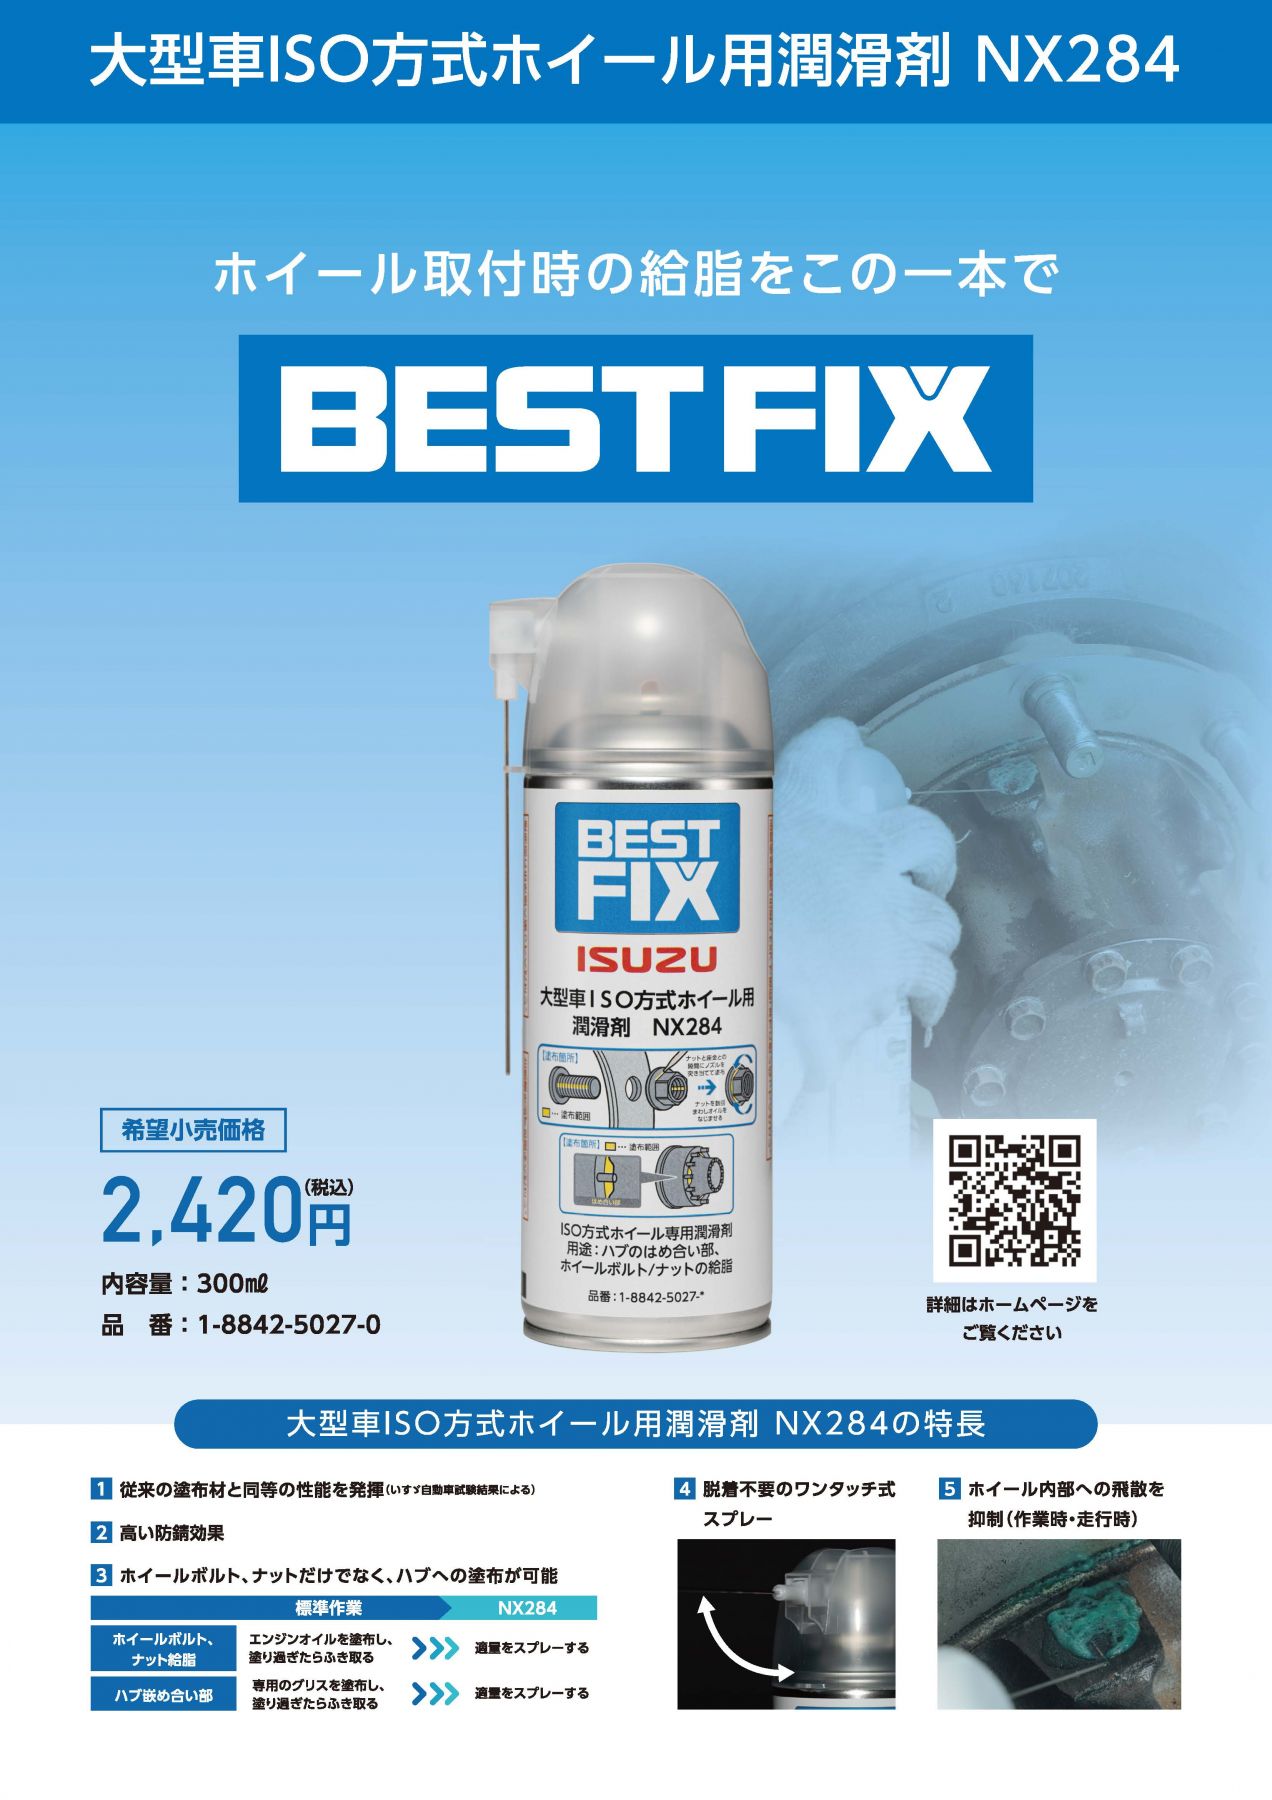 BESTFIX 大型車ISO方式ホイール用潤滑剤 NX284新発売のお知らせ